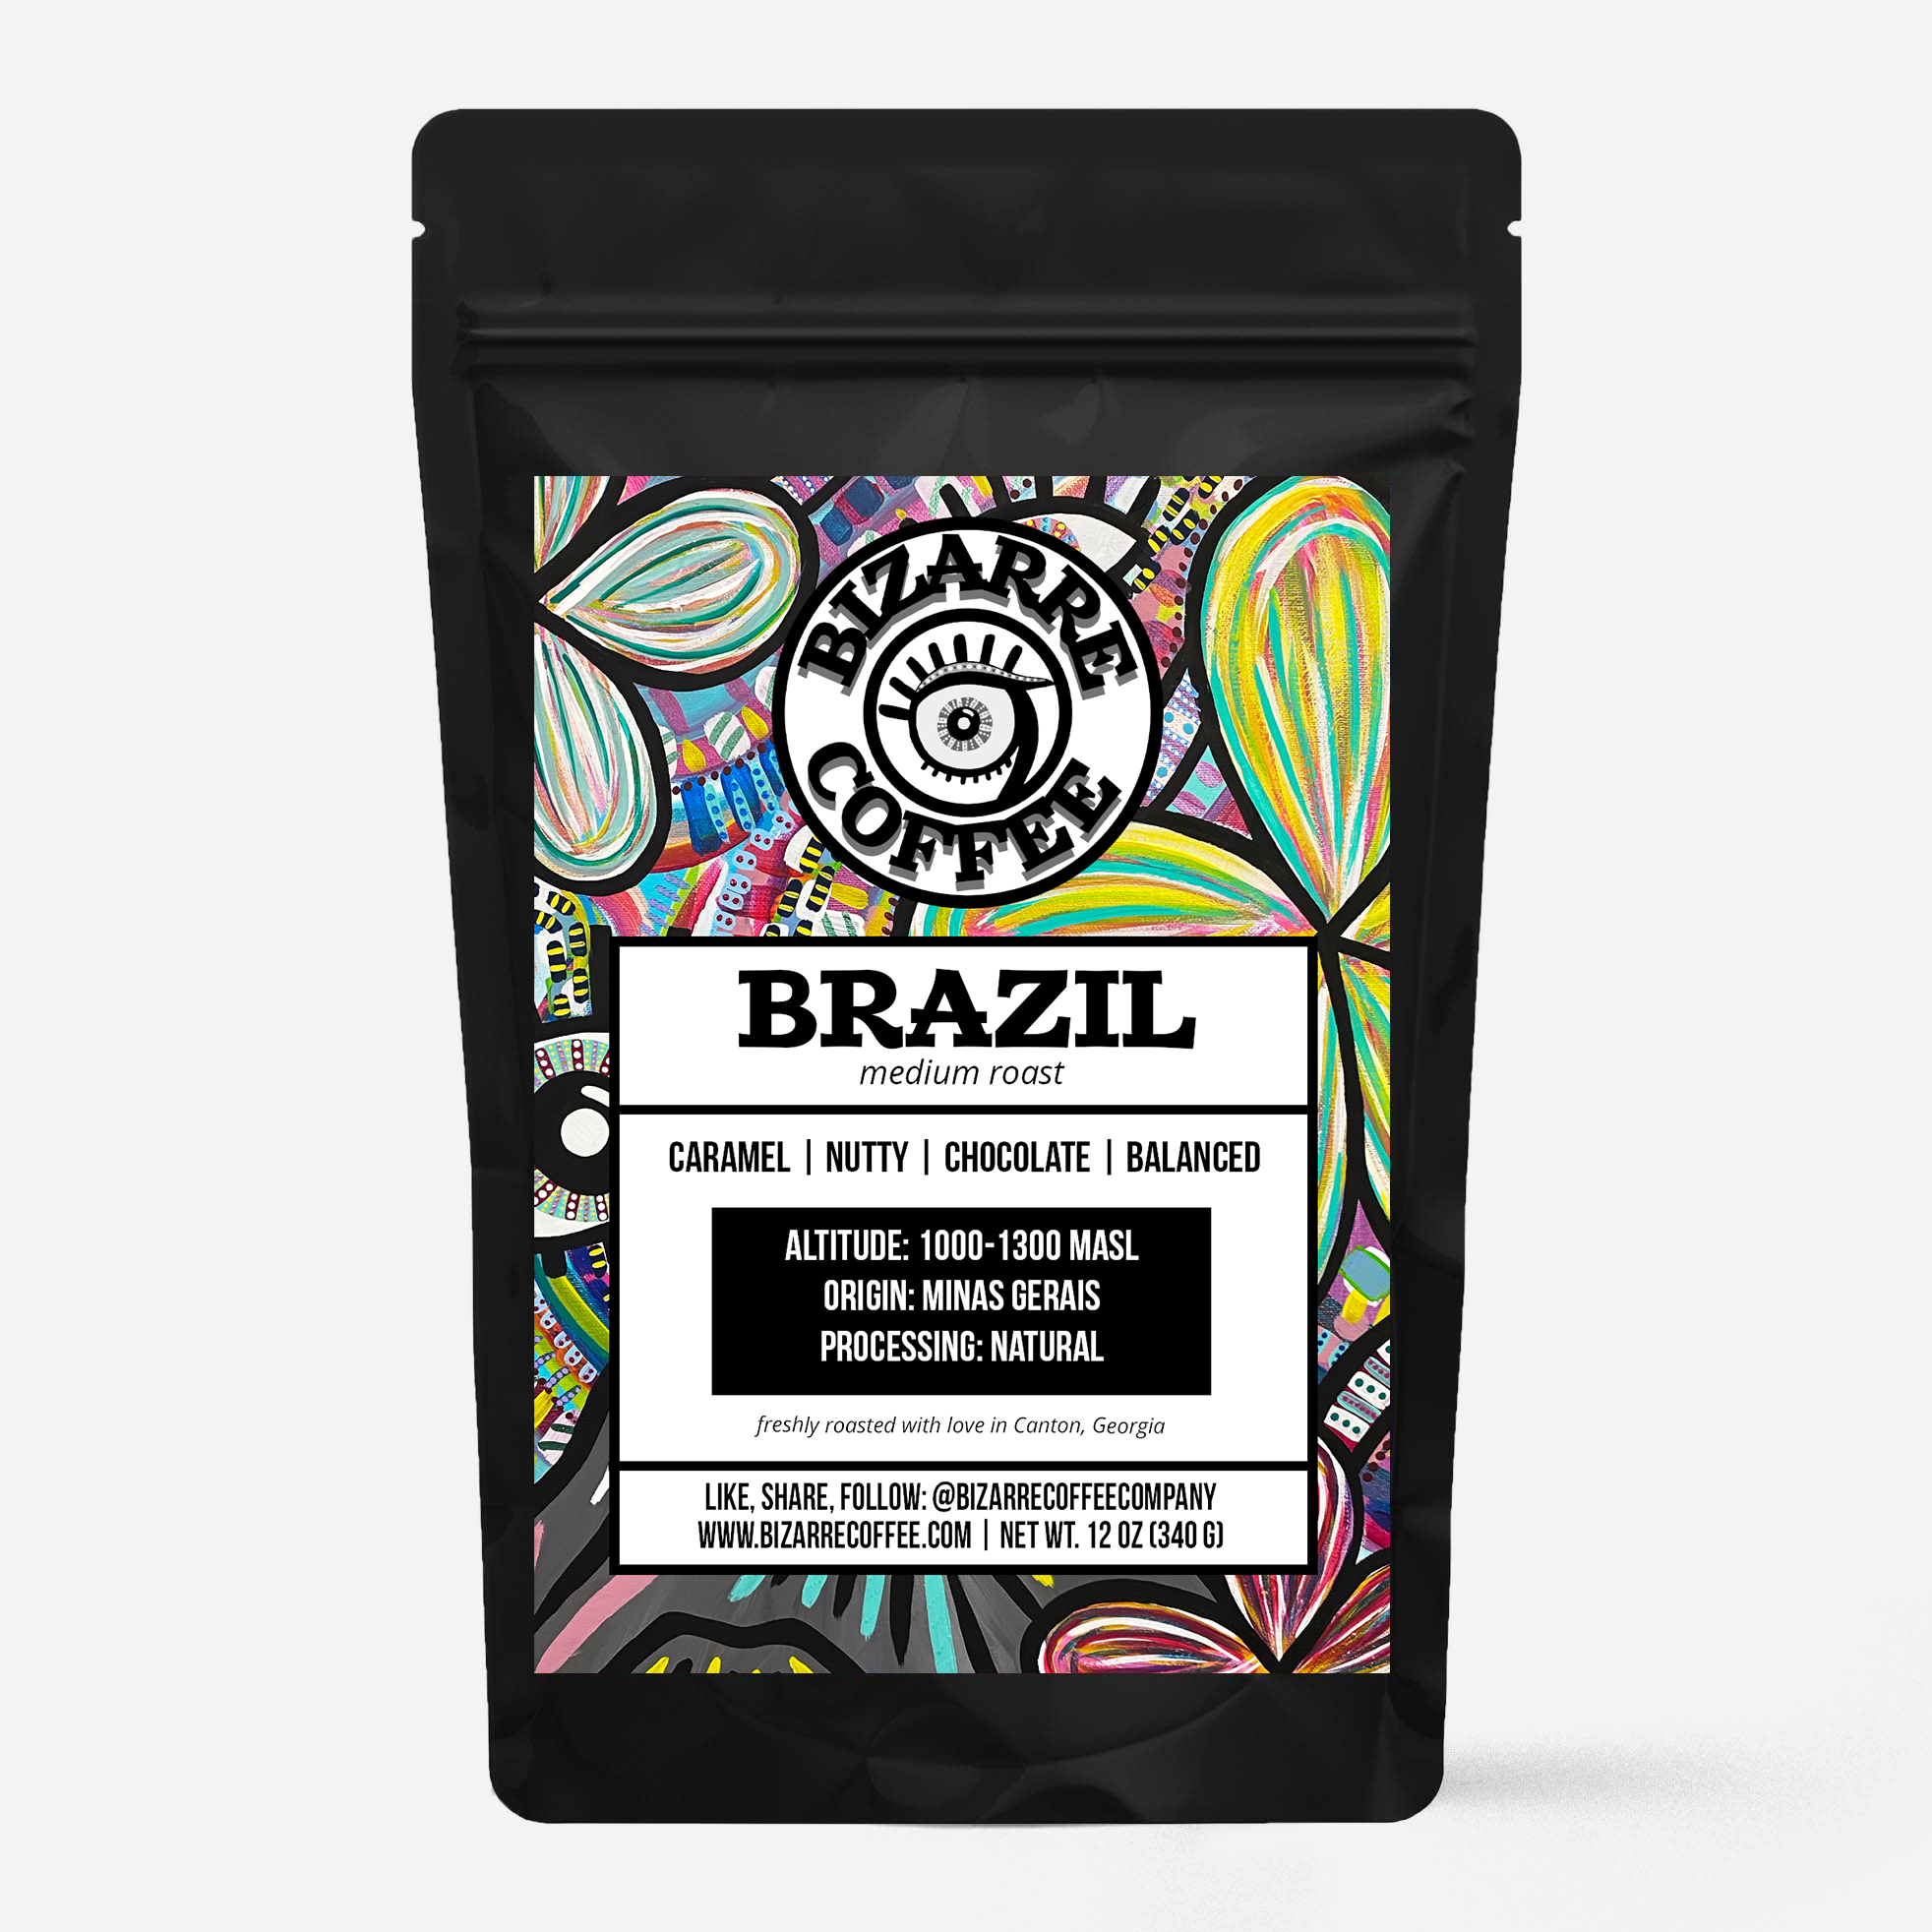 Brazil medium roast coffee bag.